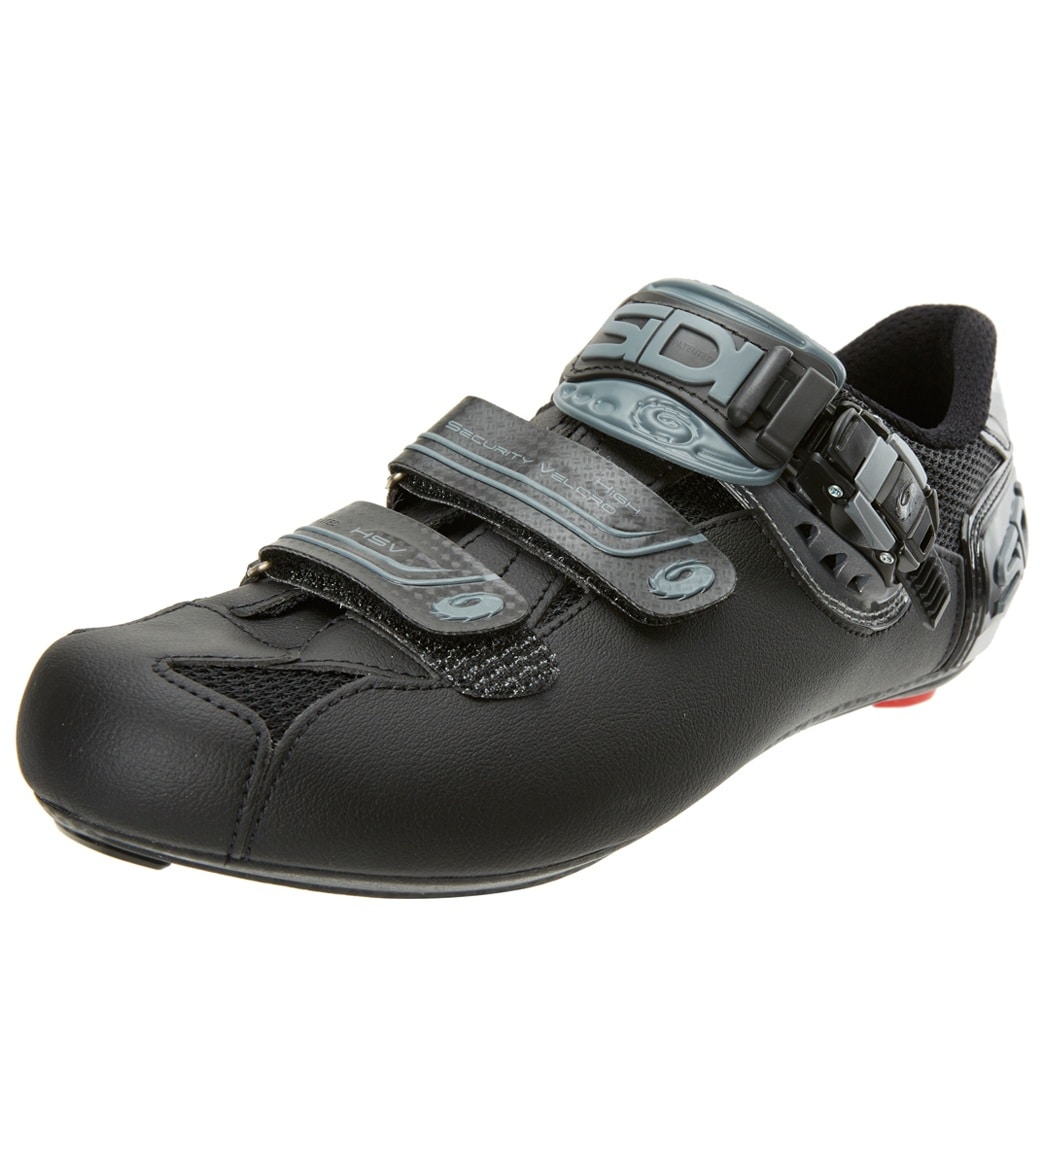 Sidi Men's Genius Shadow Cycling Shoe Mega Fit - Black/Black 42.5 - Swimoutlet.com